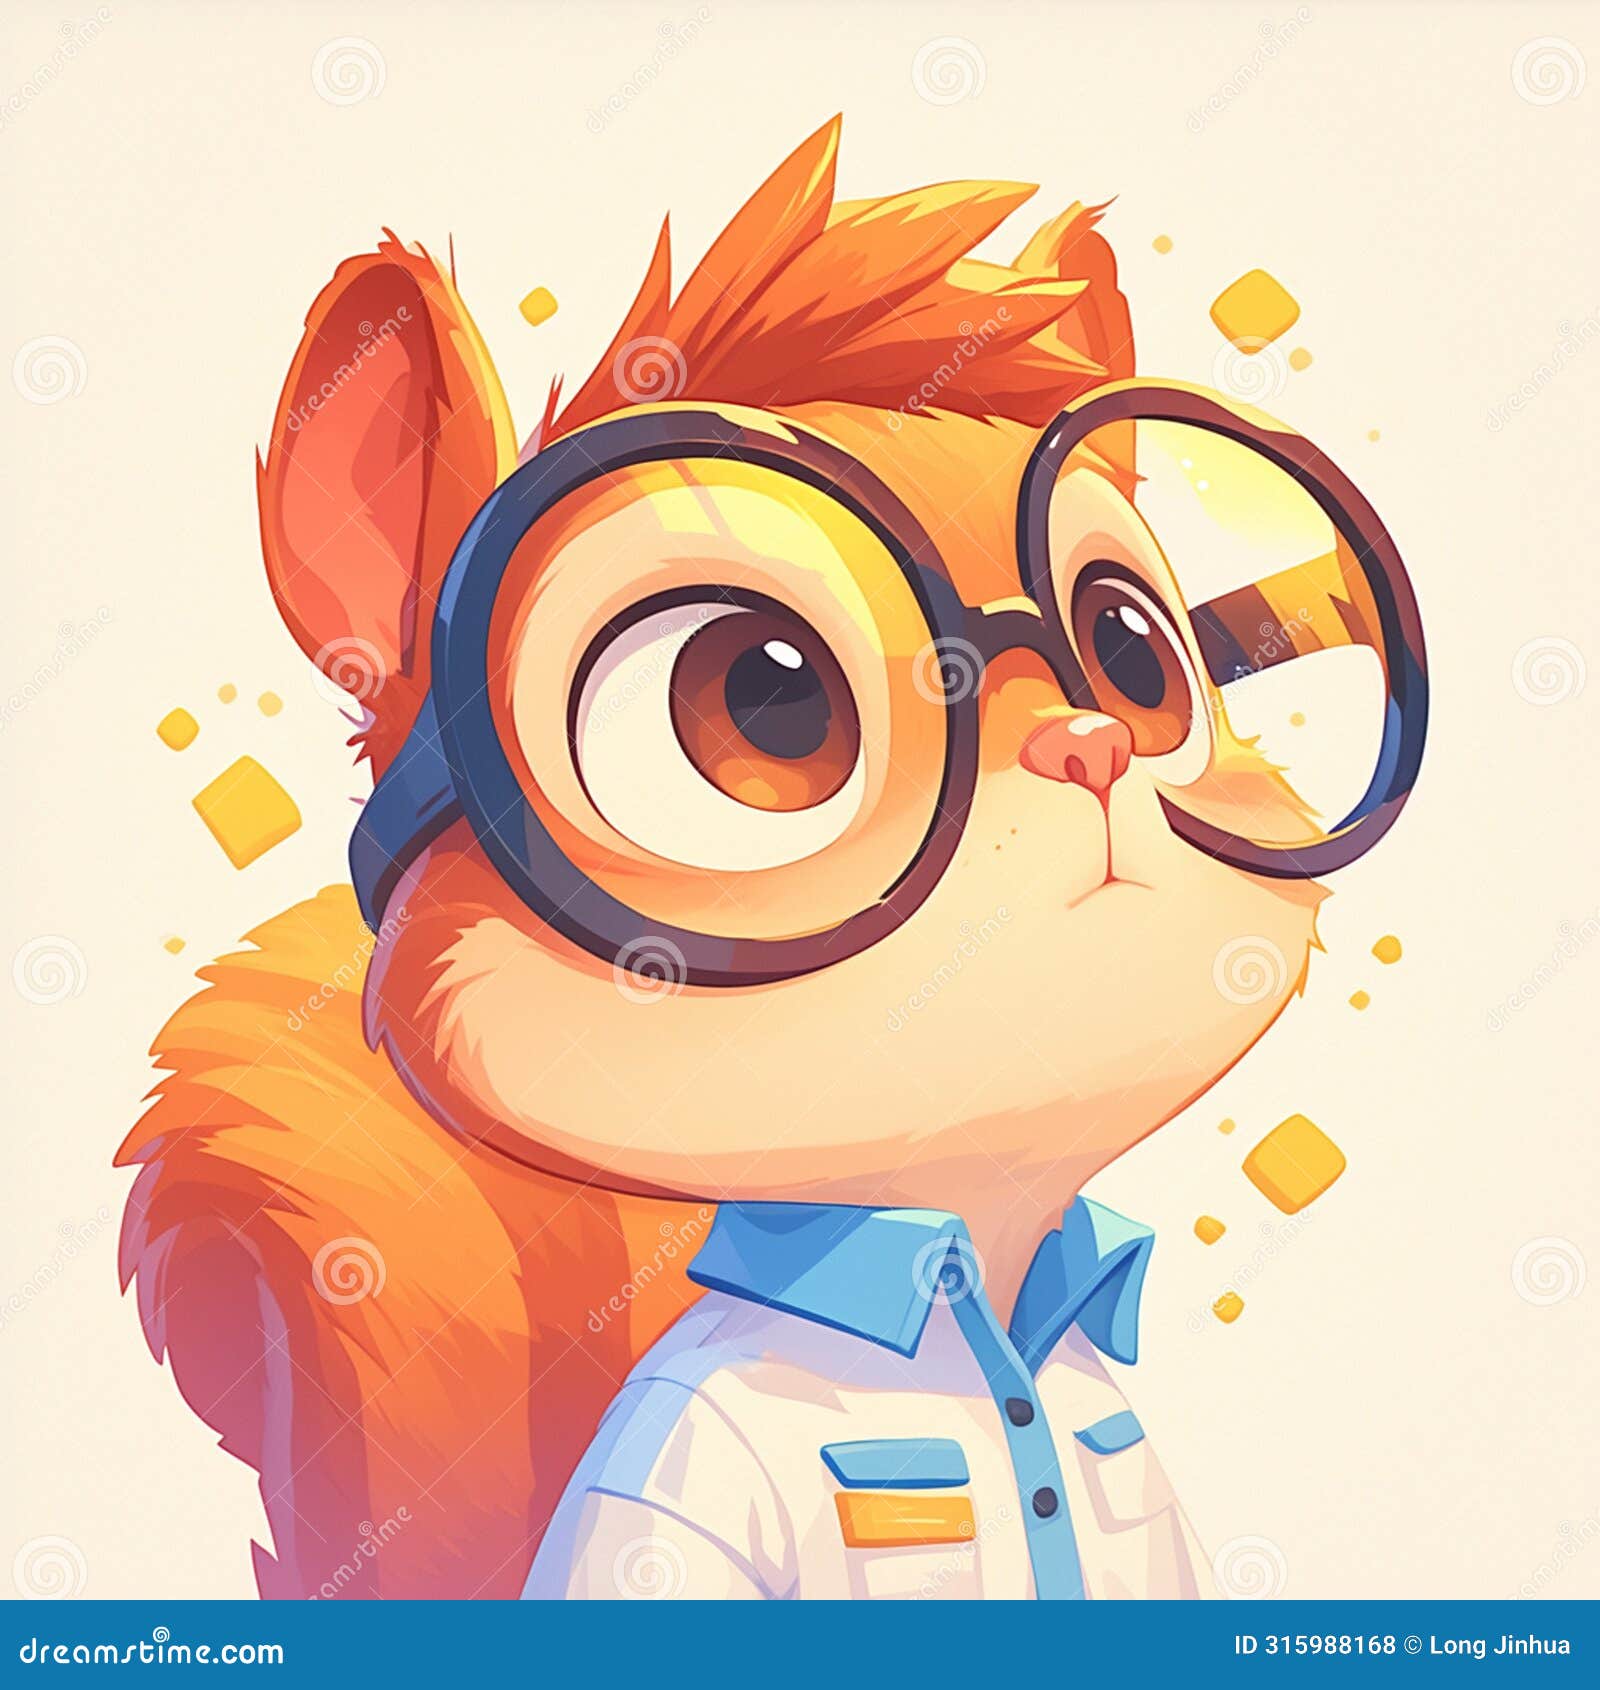 a nimble squirrel software engineer cartoon style